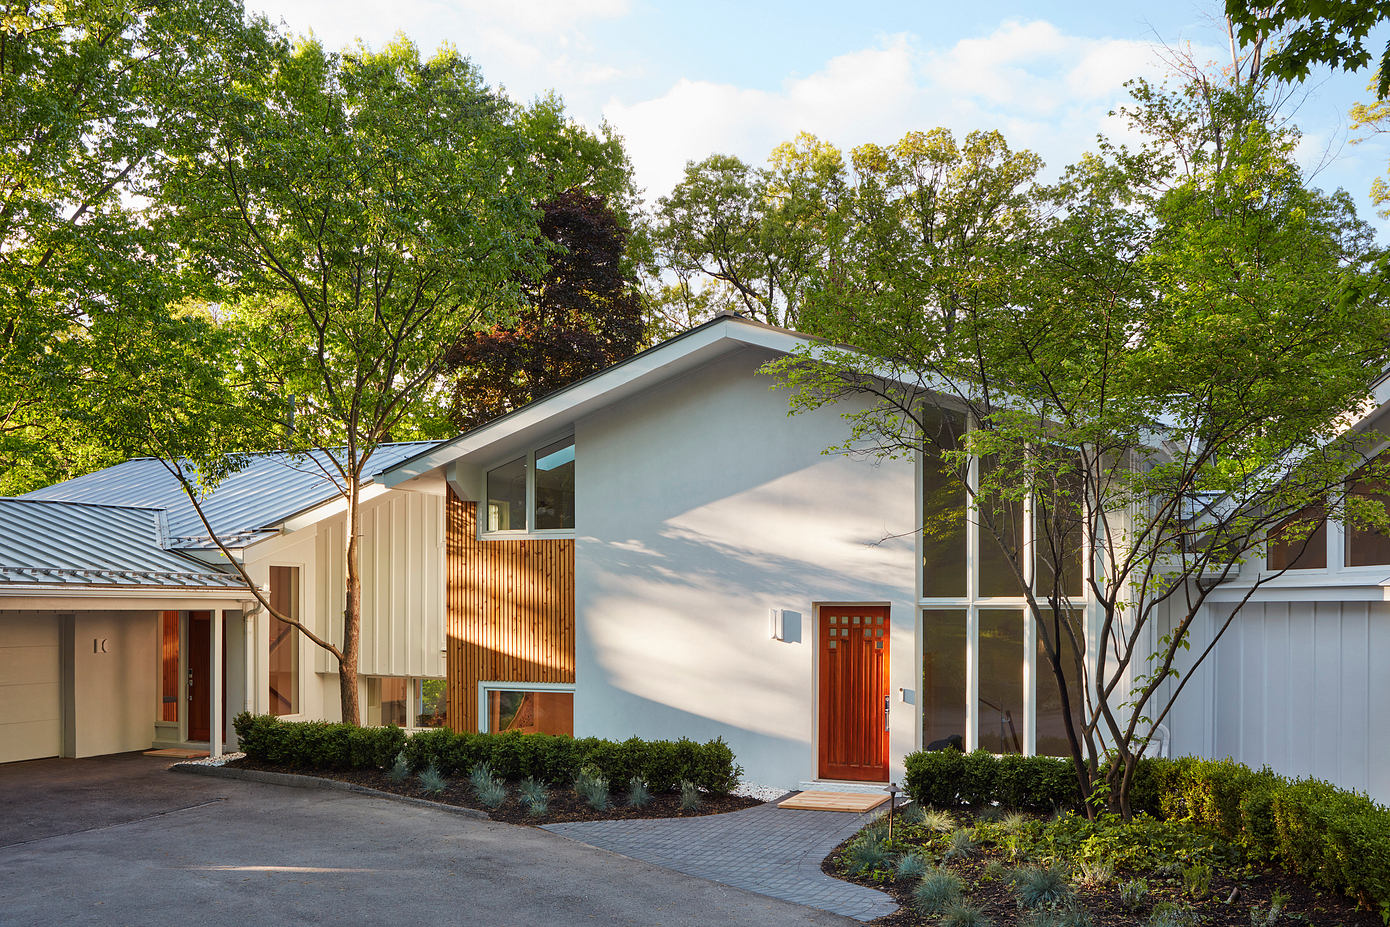 Sodon Lake House: Midcentury Modern Sanctuary in Michigan